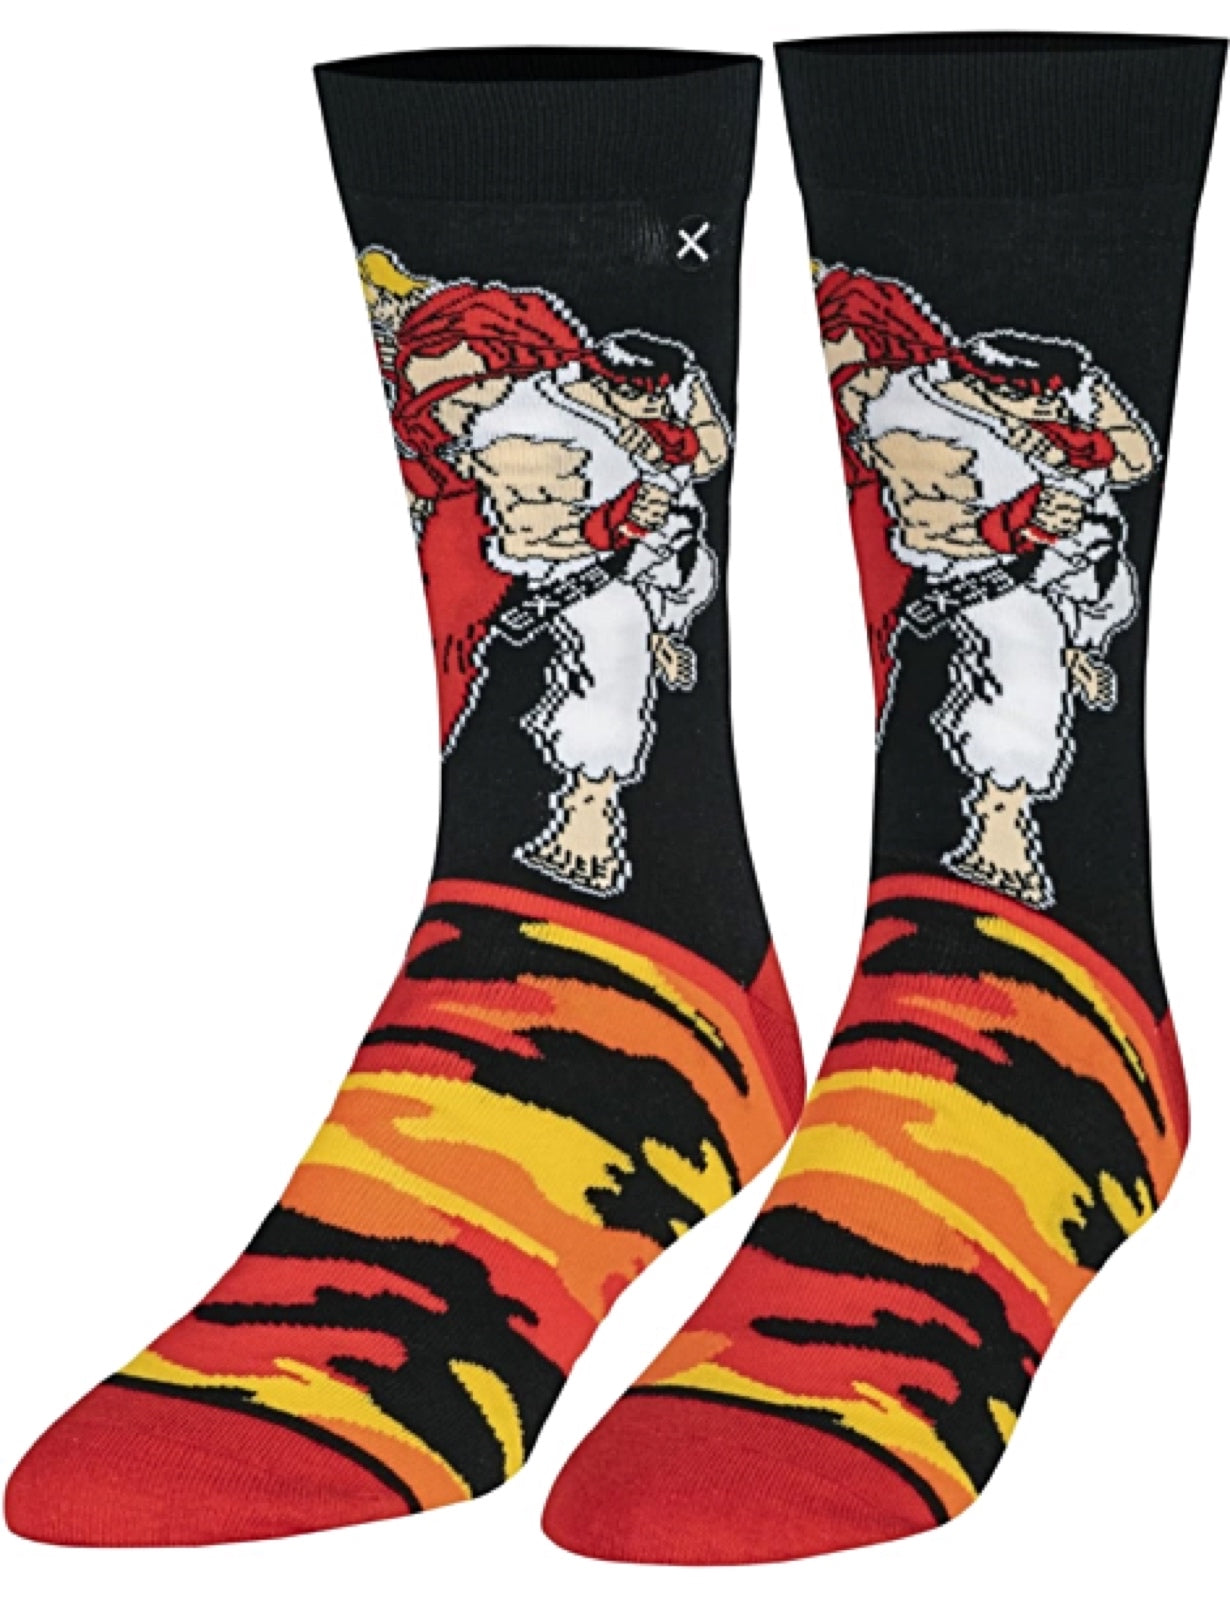 Street Fighter II Cotton Crew Socks by ODD Sox